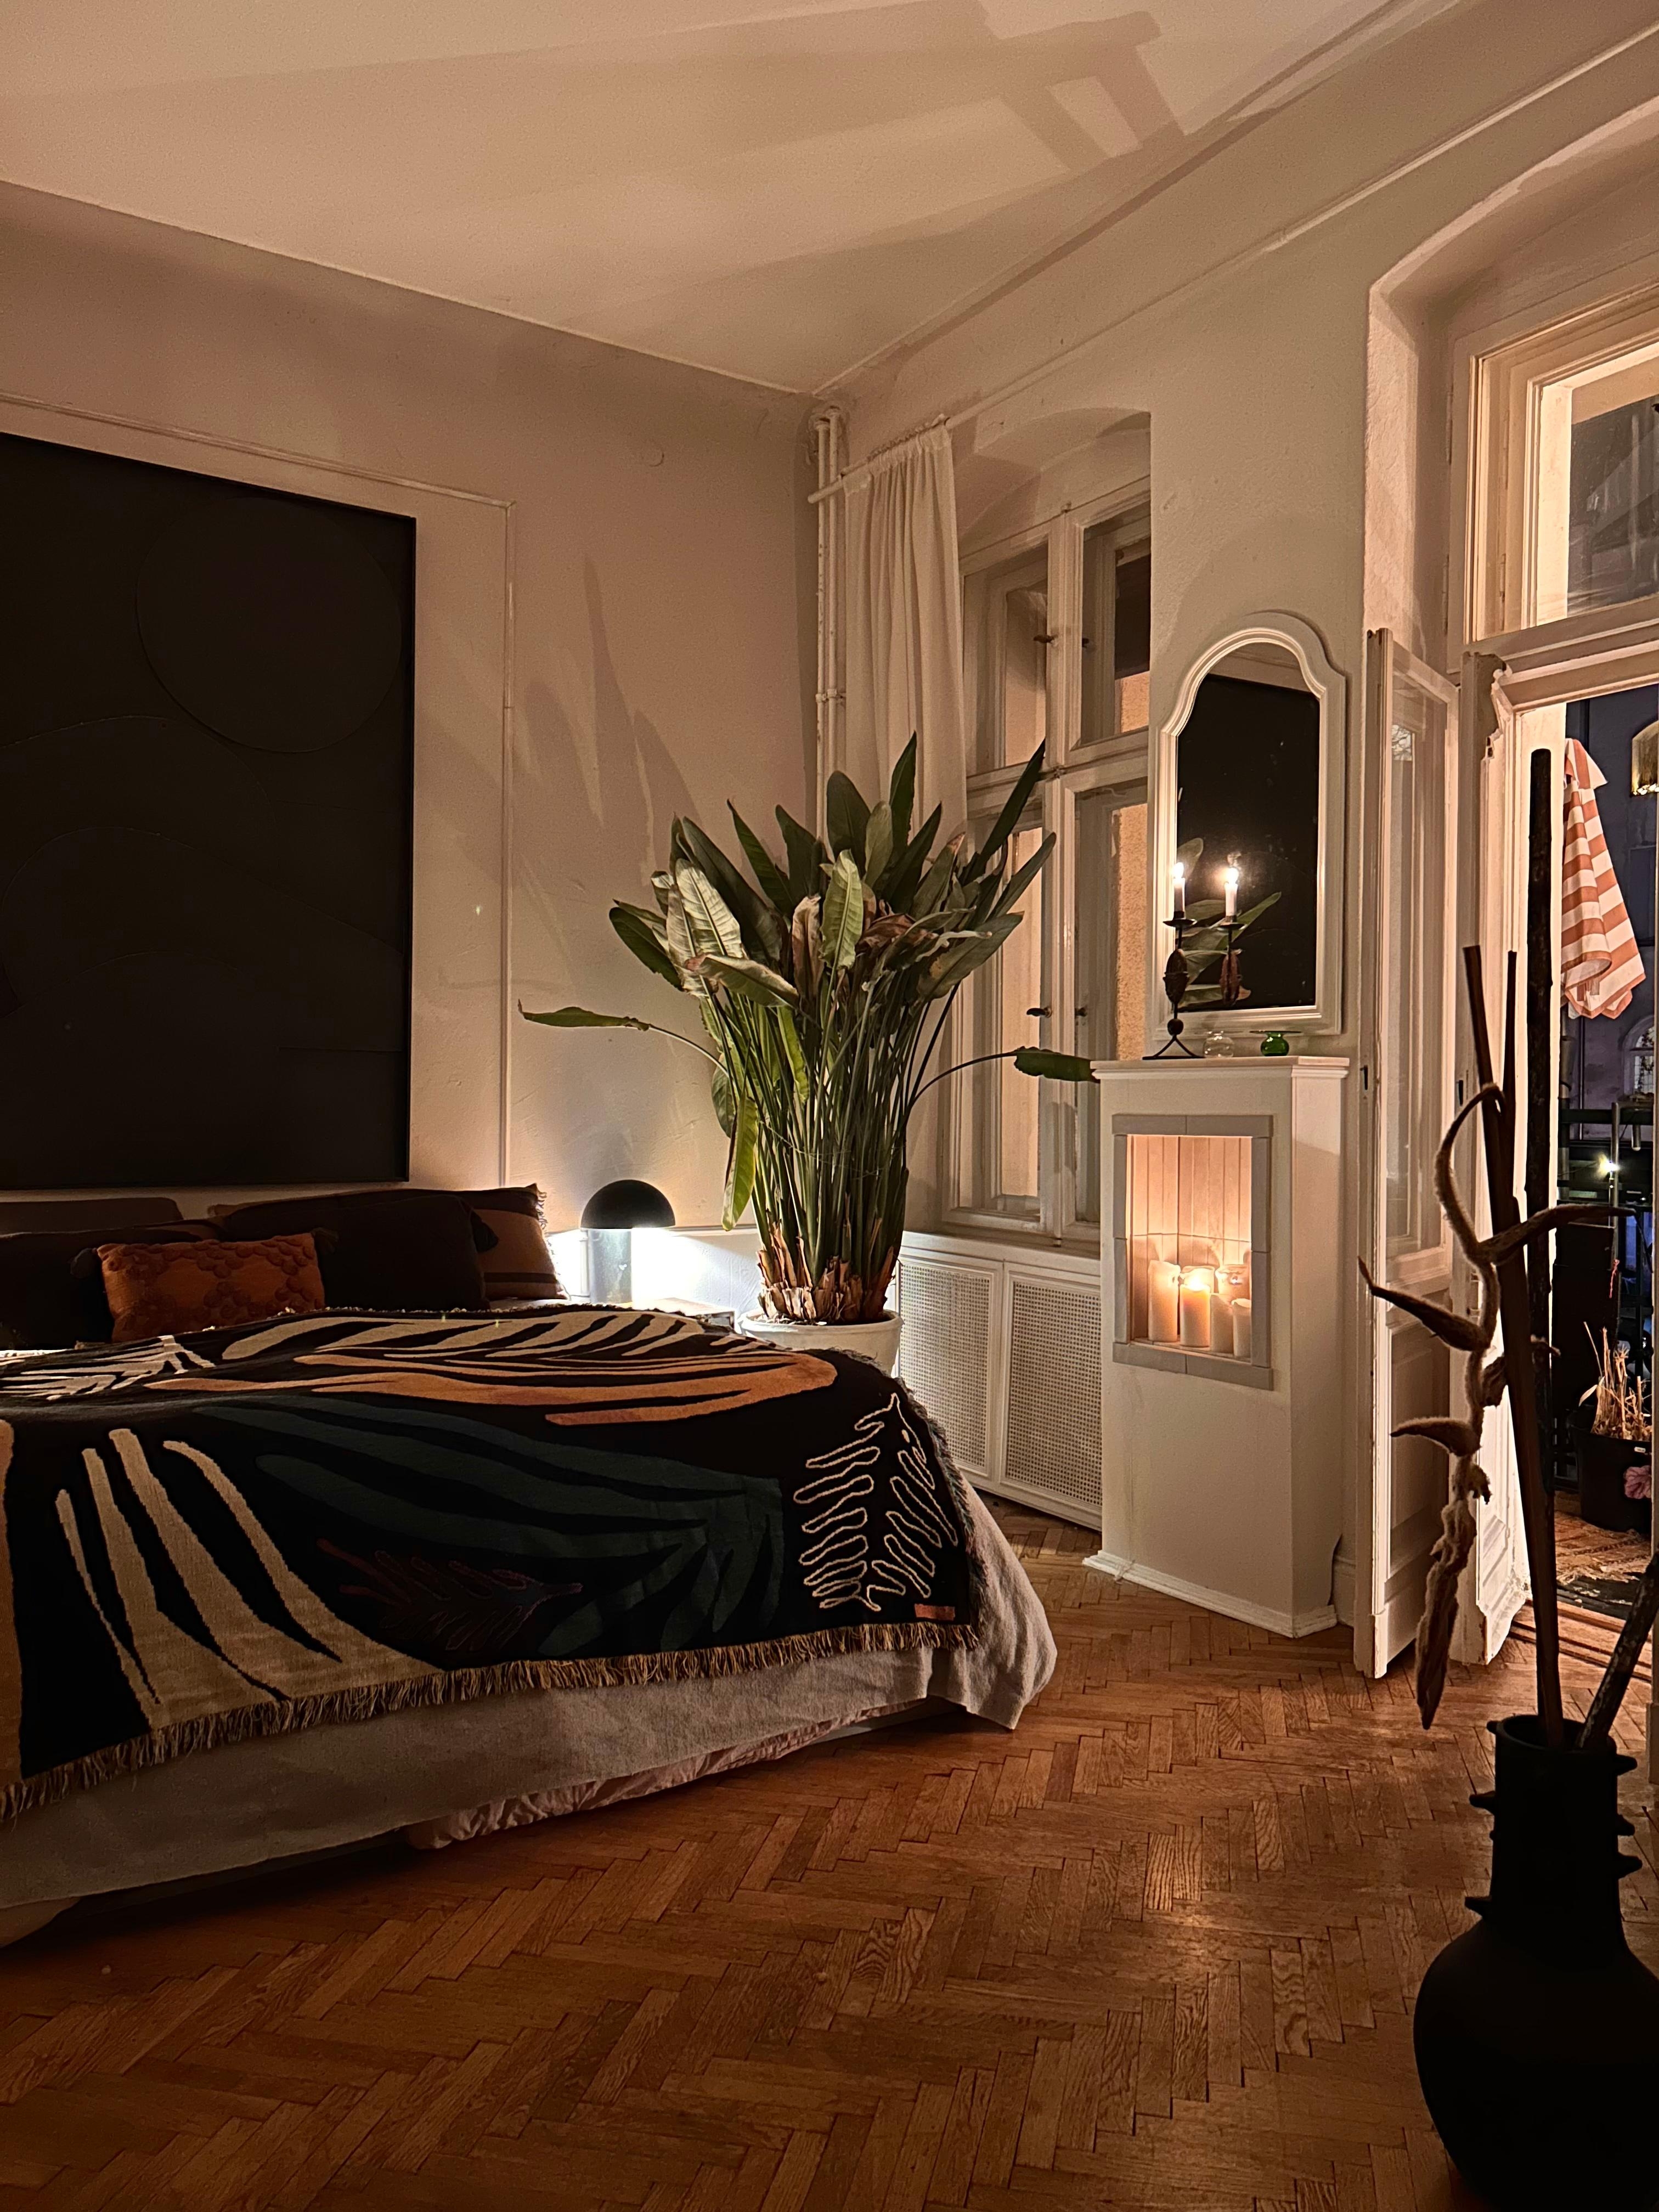 Bonne soirée ♥️ #schlafzimmer #bedroom #bett #kunst #kamin #balkon #altbau #diy